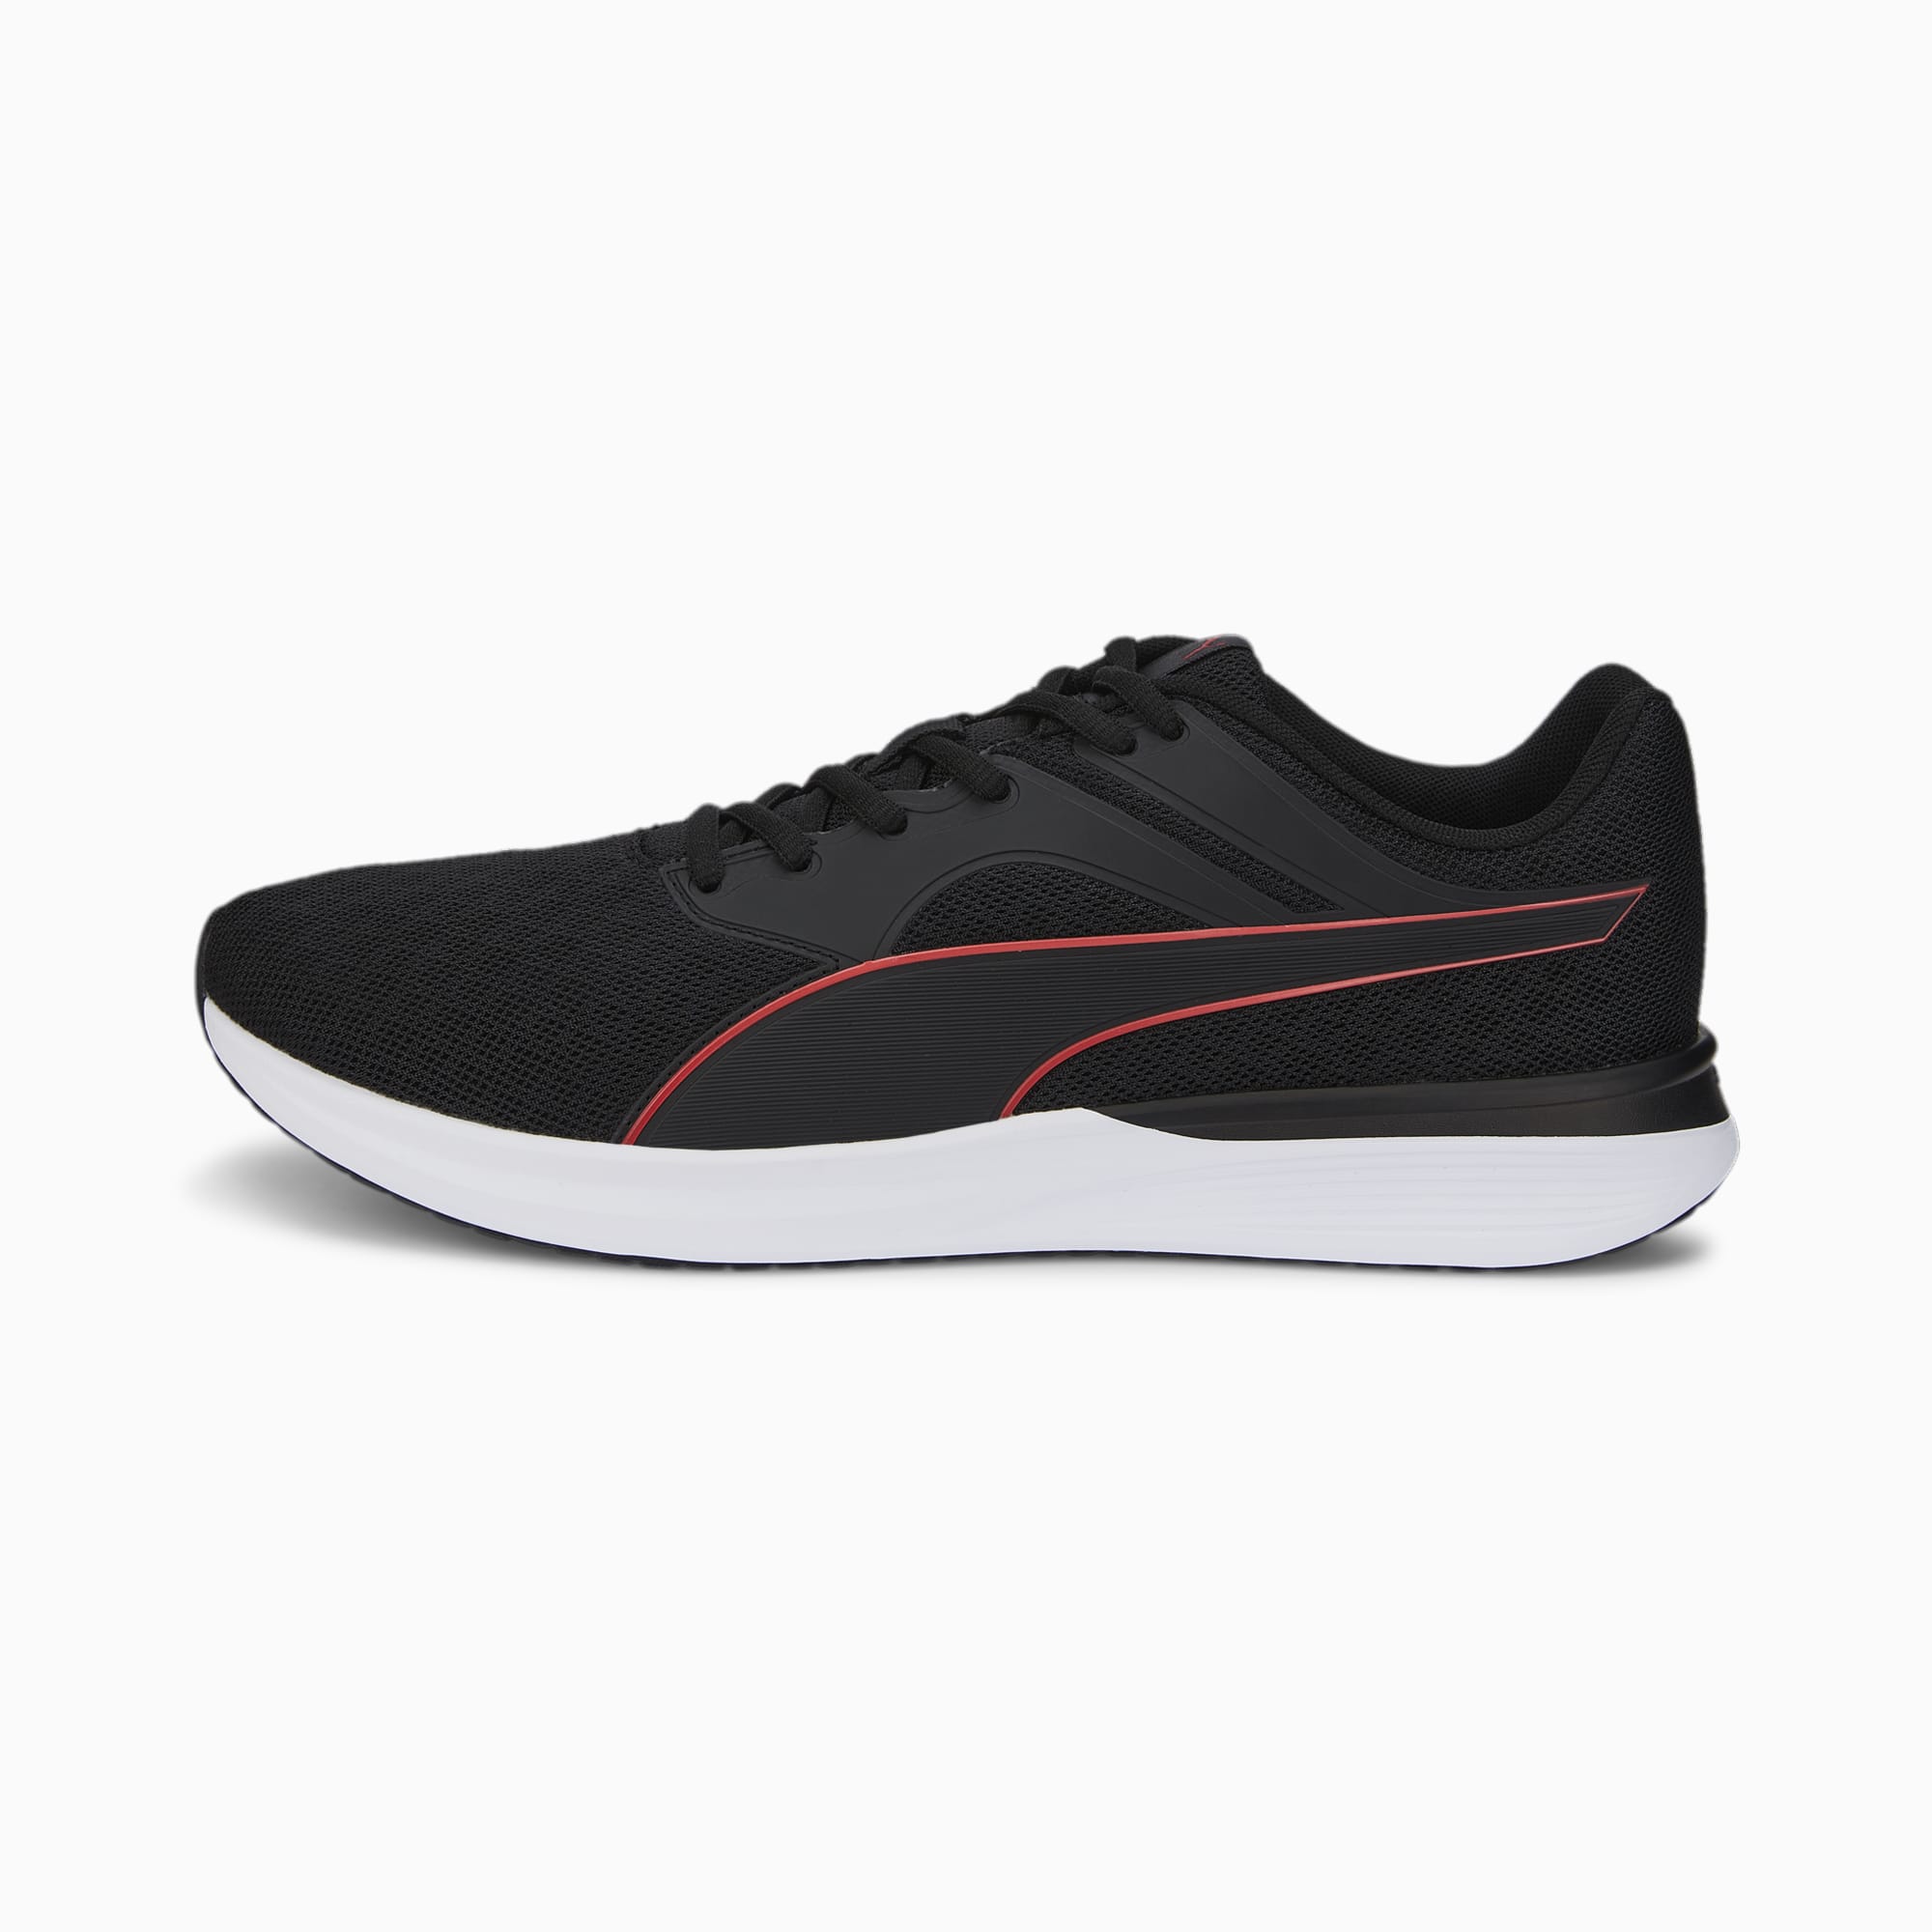 Transport Running Shoes Puma Black-High Risk Red | PUMA Friends & Family Sale | PUMA